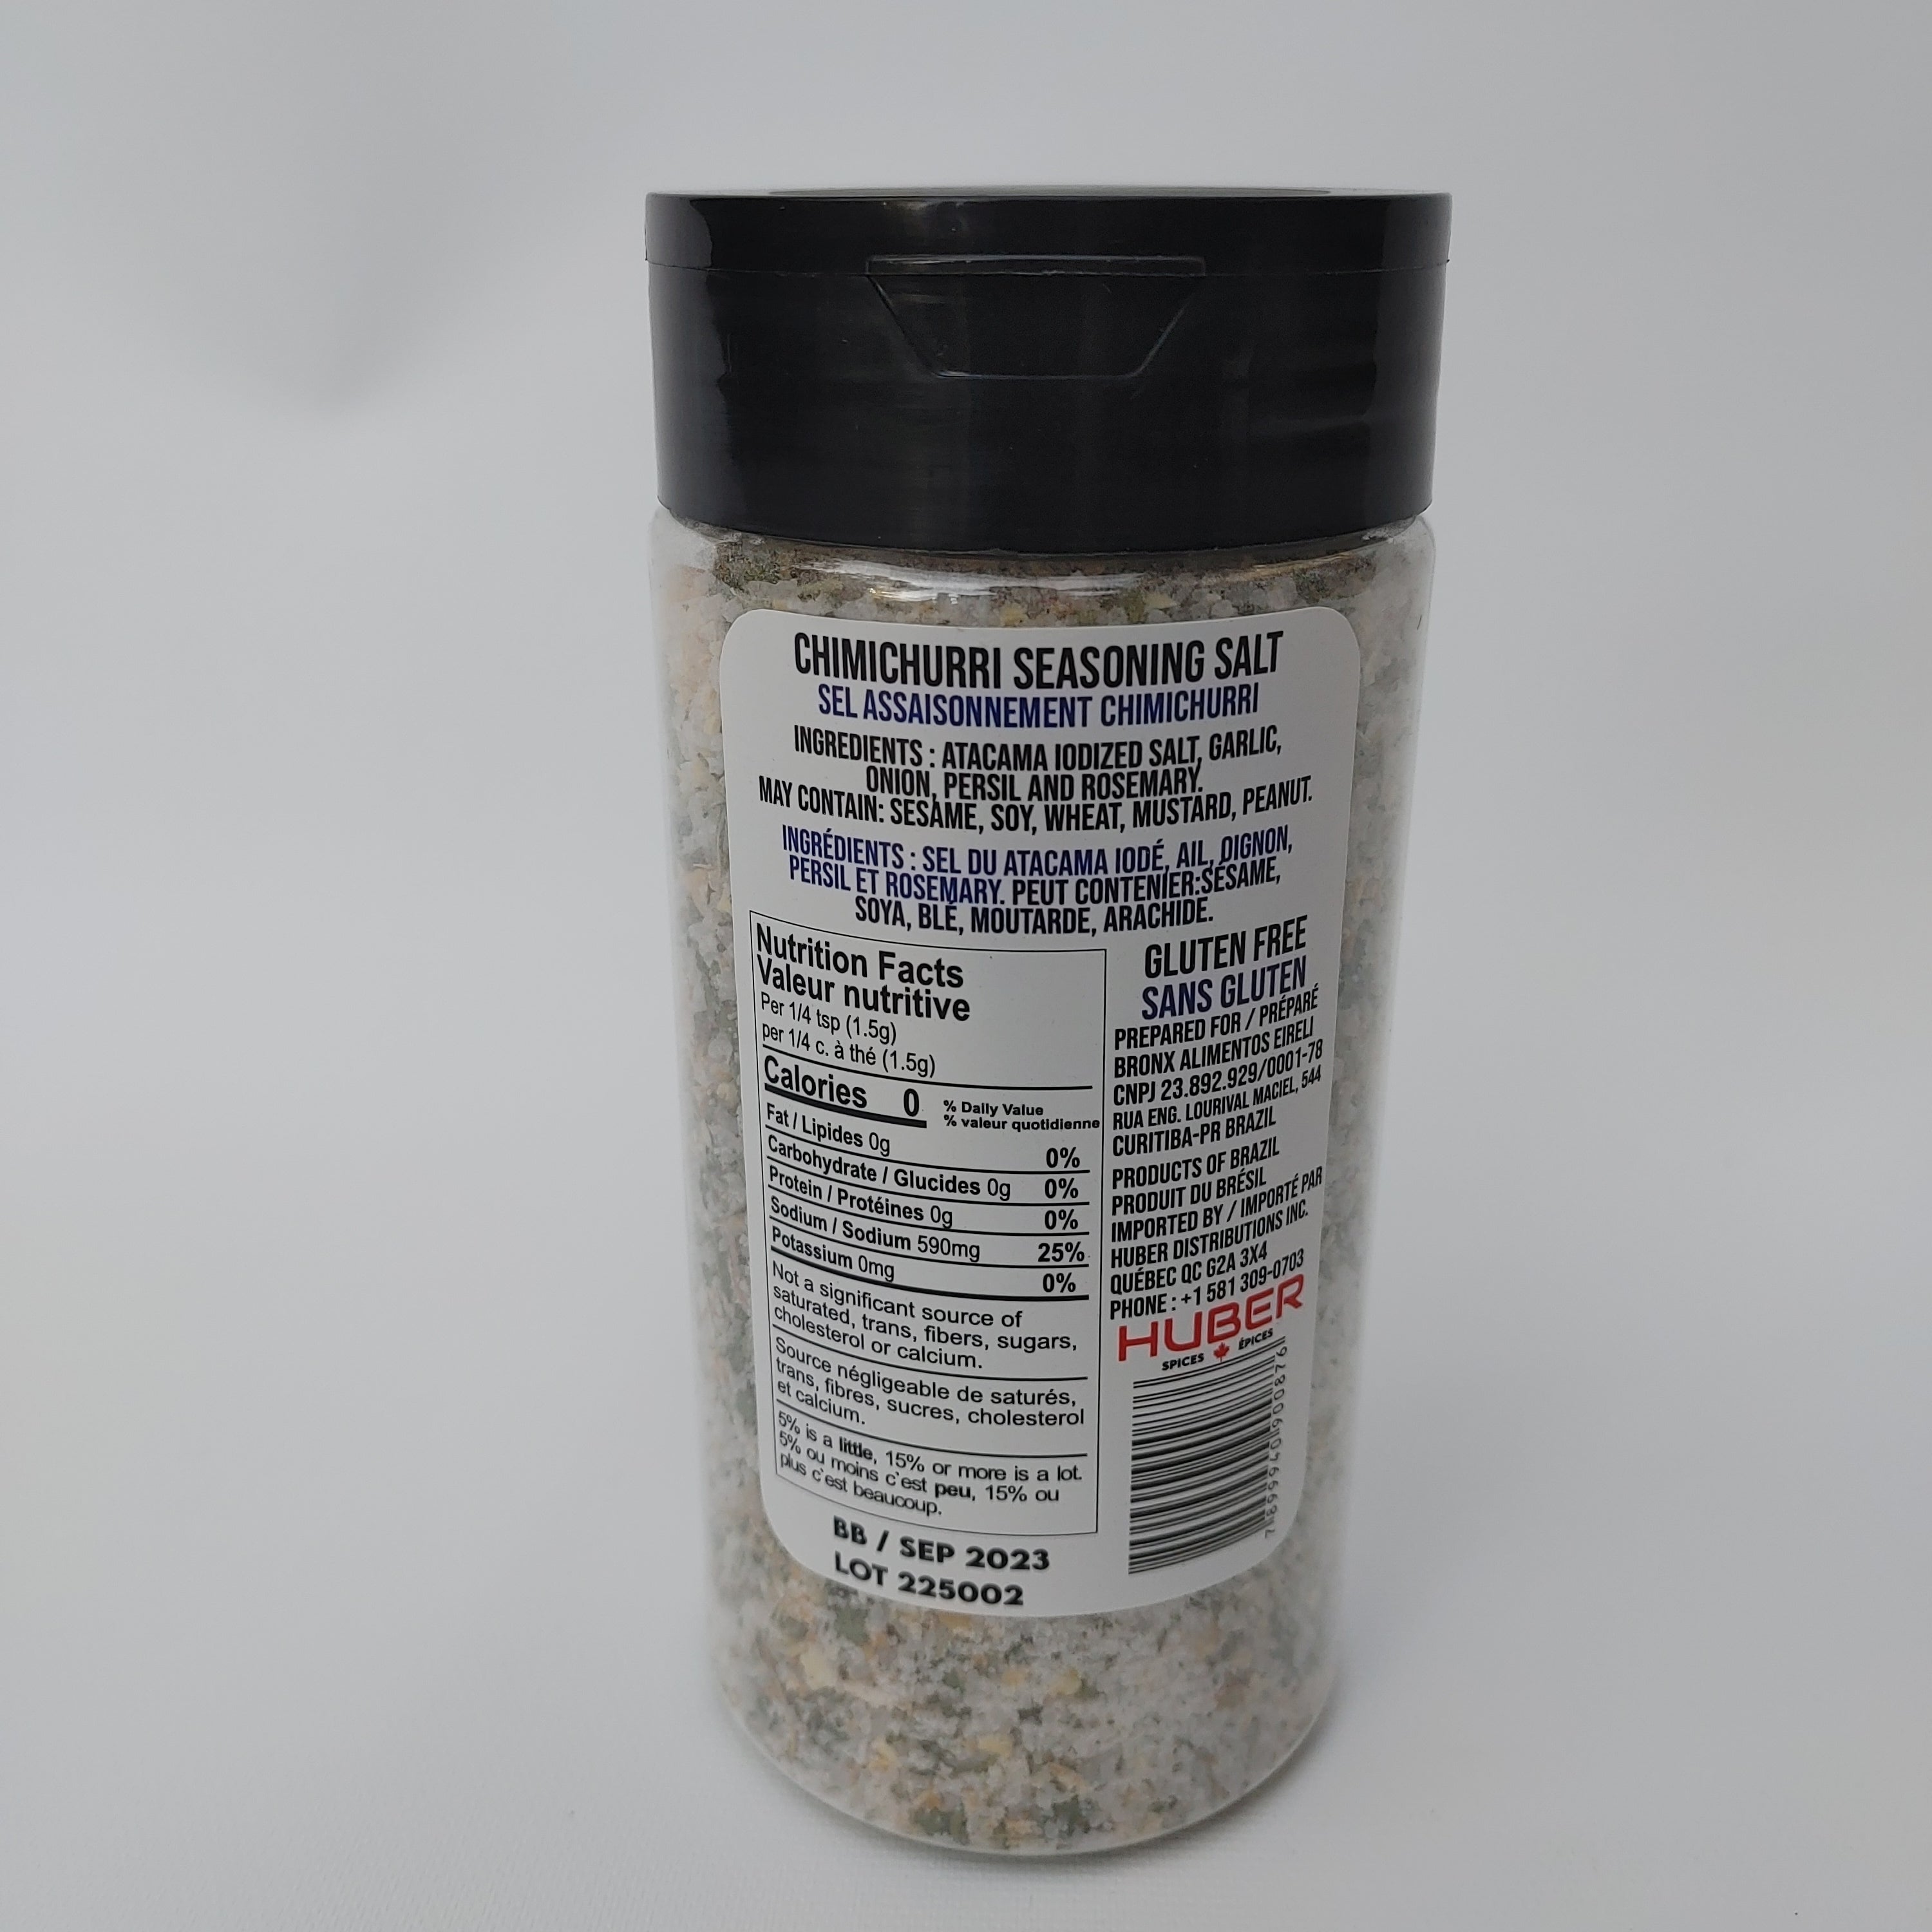 HUBER - Salt Chimichurri Seasoning - FINAL SALE - EXPIRED or CLOSE TO EXPIRY